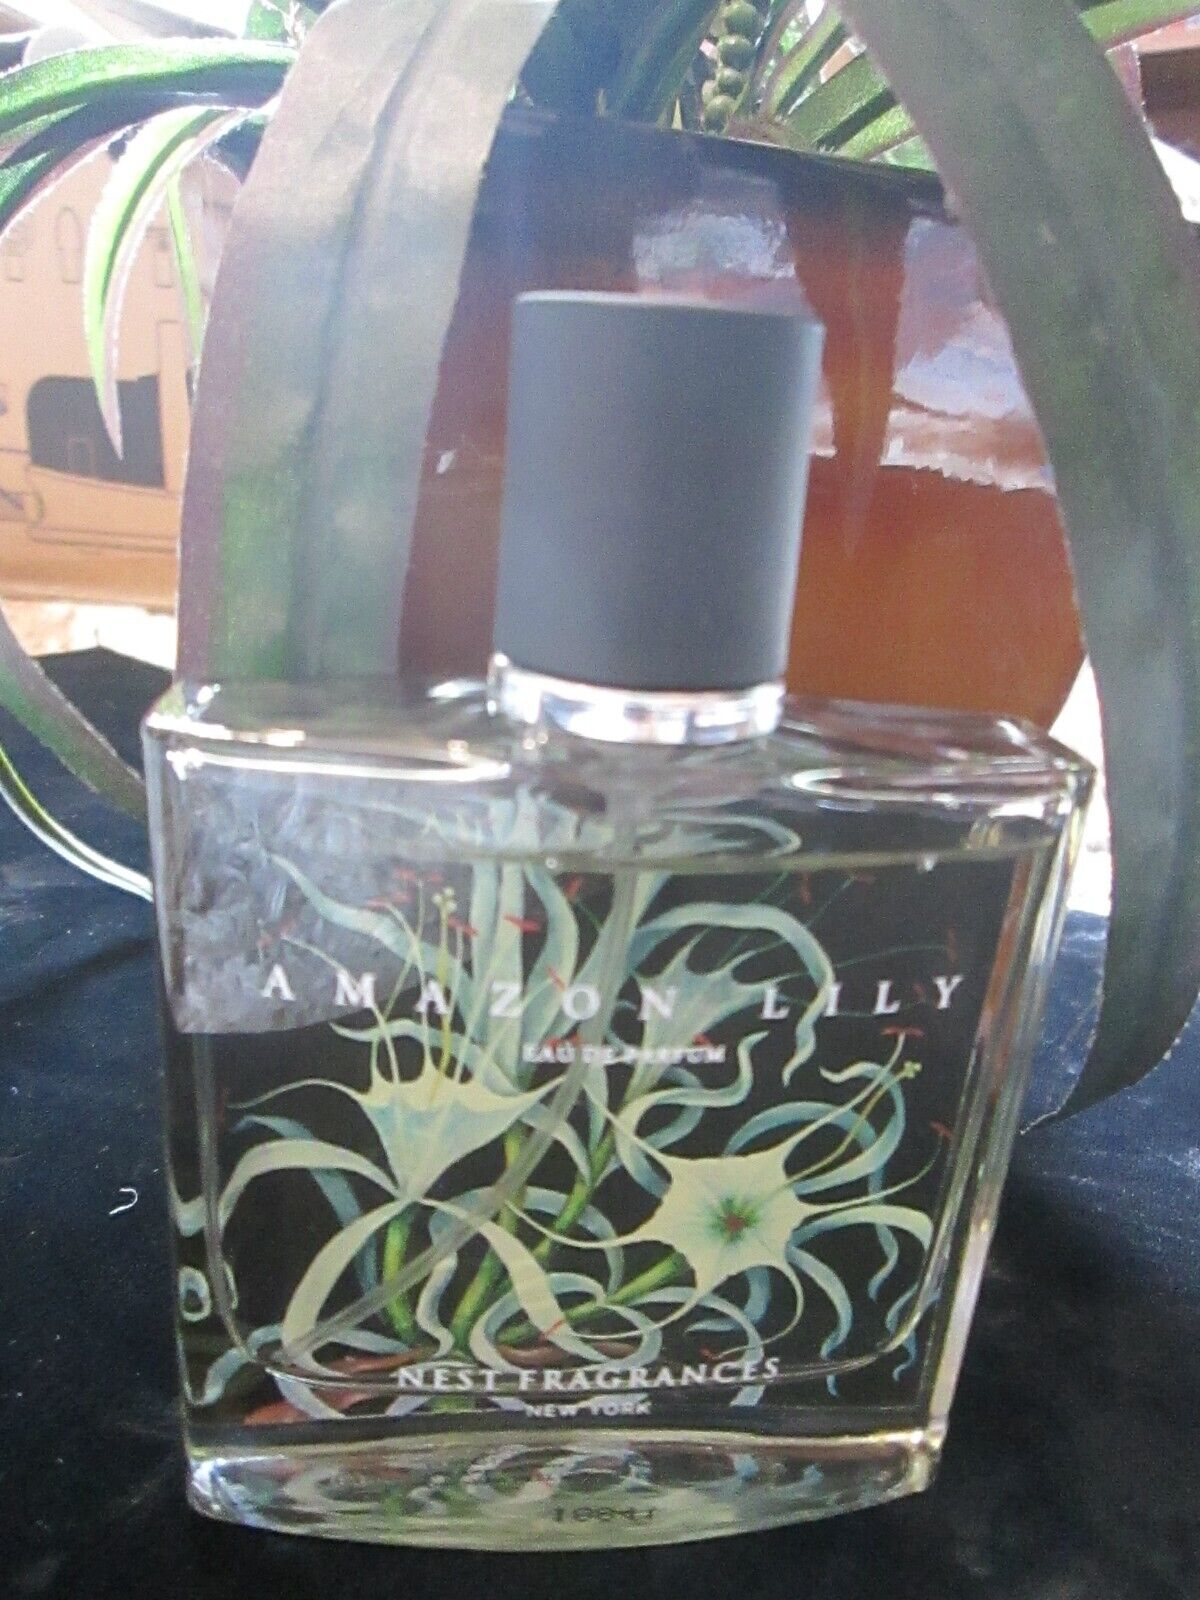 Nest Fragrances Amazon Lily Eau de Parfum Spray 1.7 fl. oz New York (95% Full)